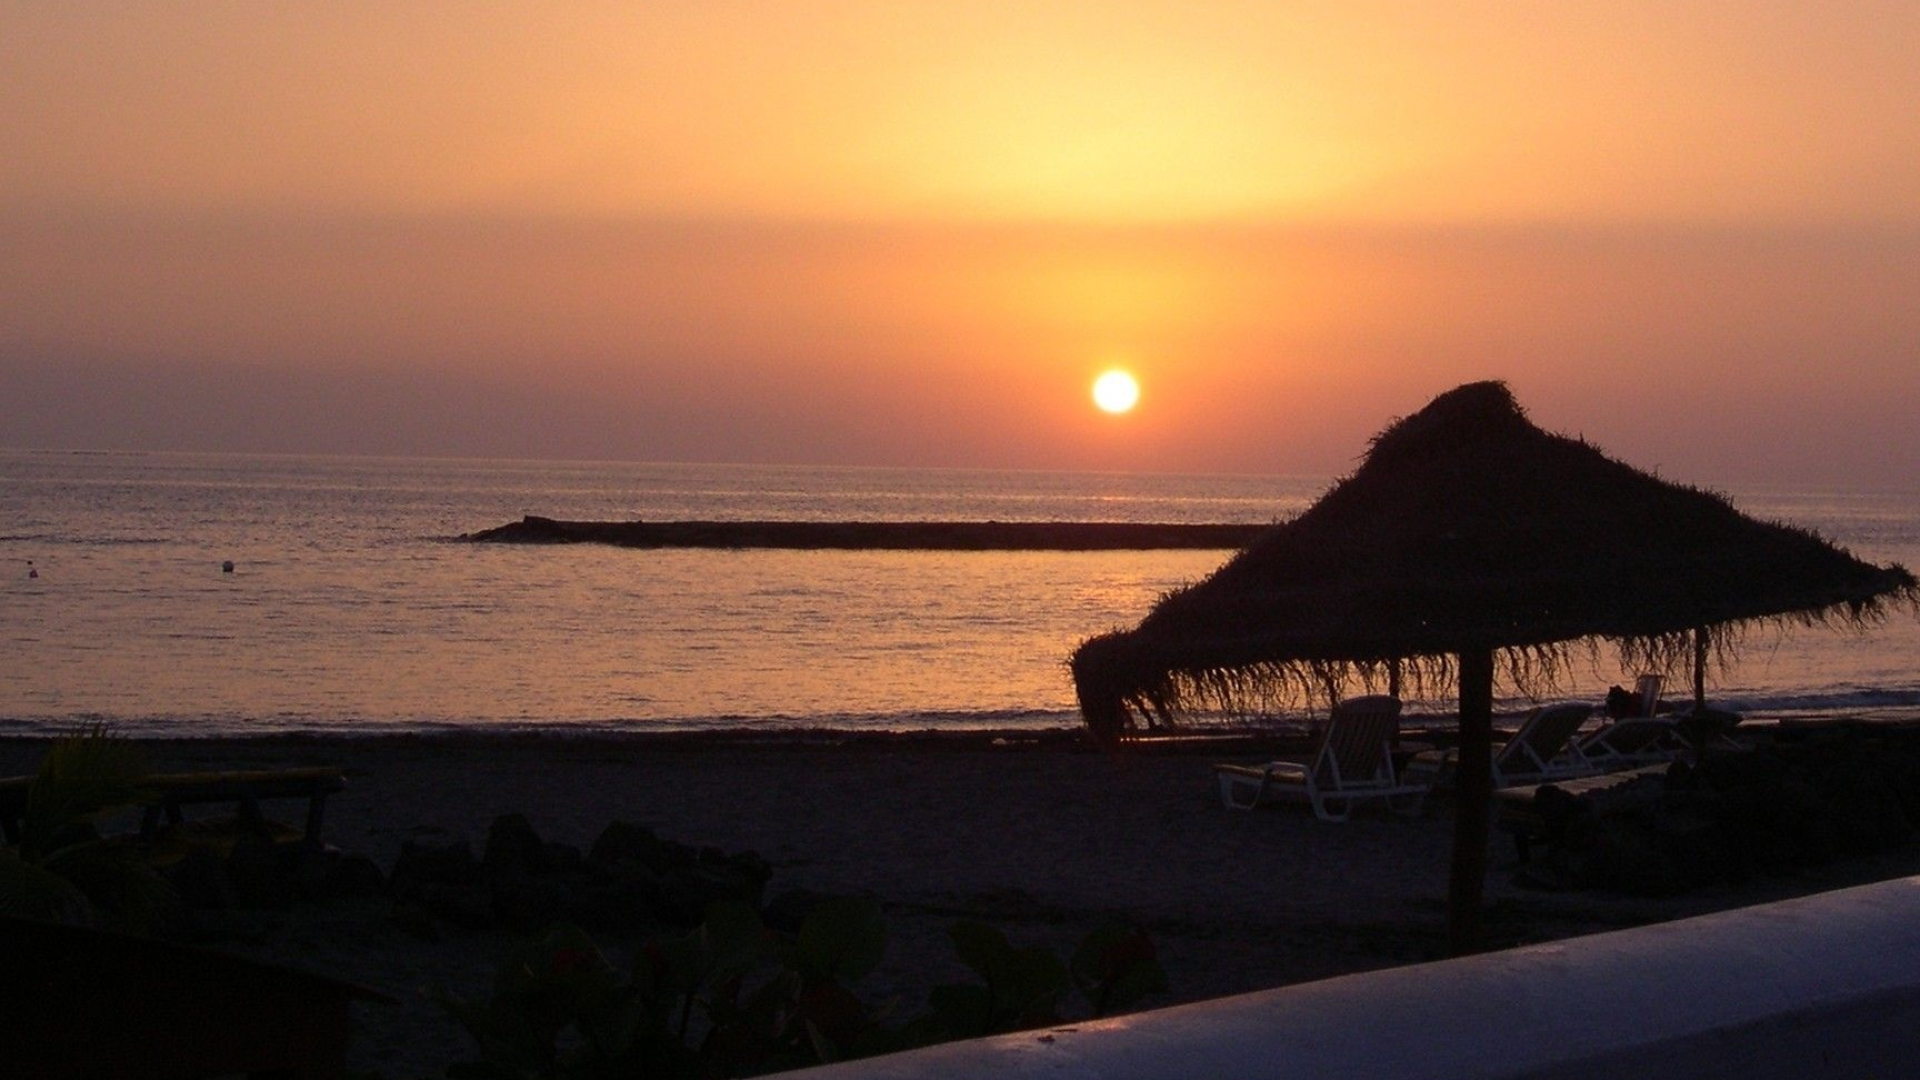 Tenerife sunset wallpapers, Breathtaking backgrounds, Captivating views, Golden hour beauty, 1920x1080 Full HD Desktop